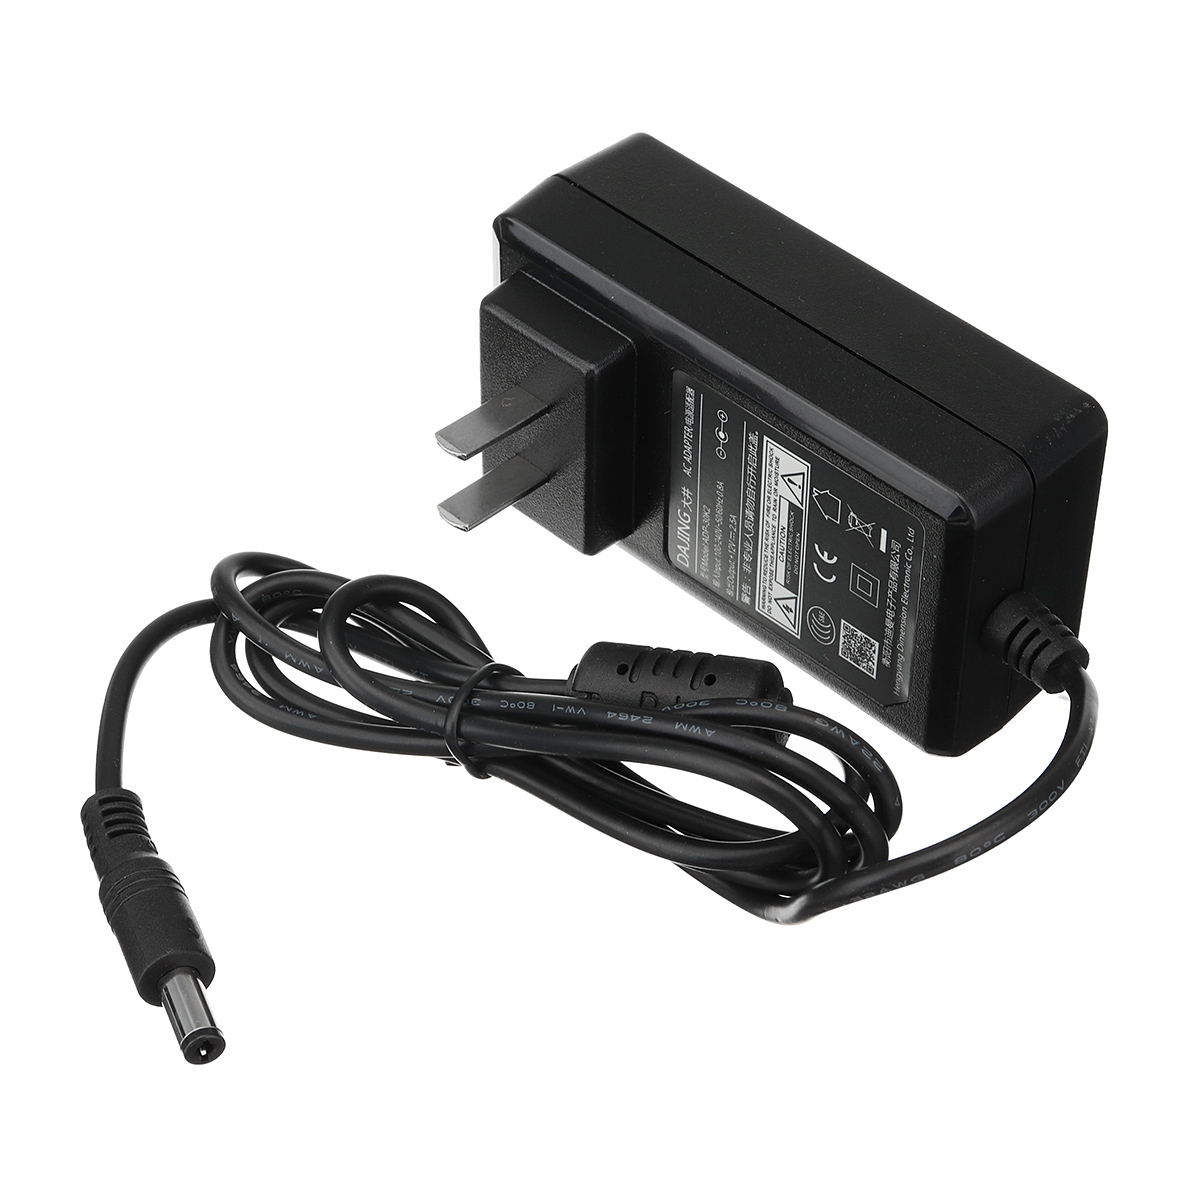 Power-20-Power-AC-Adapter-USEUAU-Plug-PC-Development-Kit-For-Xbox-One-SX-Kinect-1319225-6